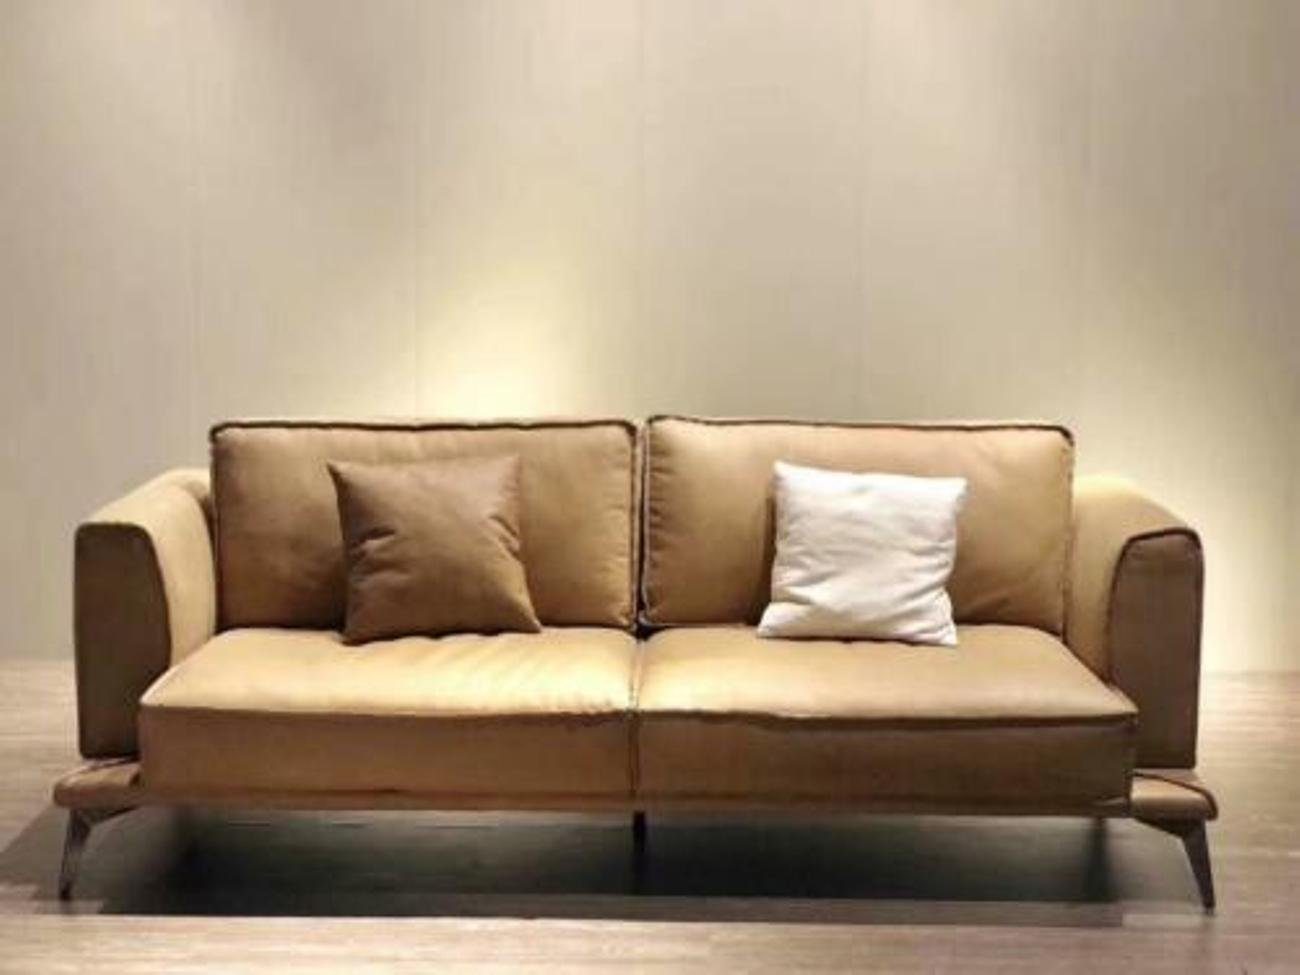 JVmoebel 3-Sitzer Design Dreisitzer Couch Polster Sofa Moderne 3er Sitz Sofas, Made in Europe